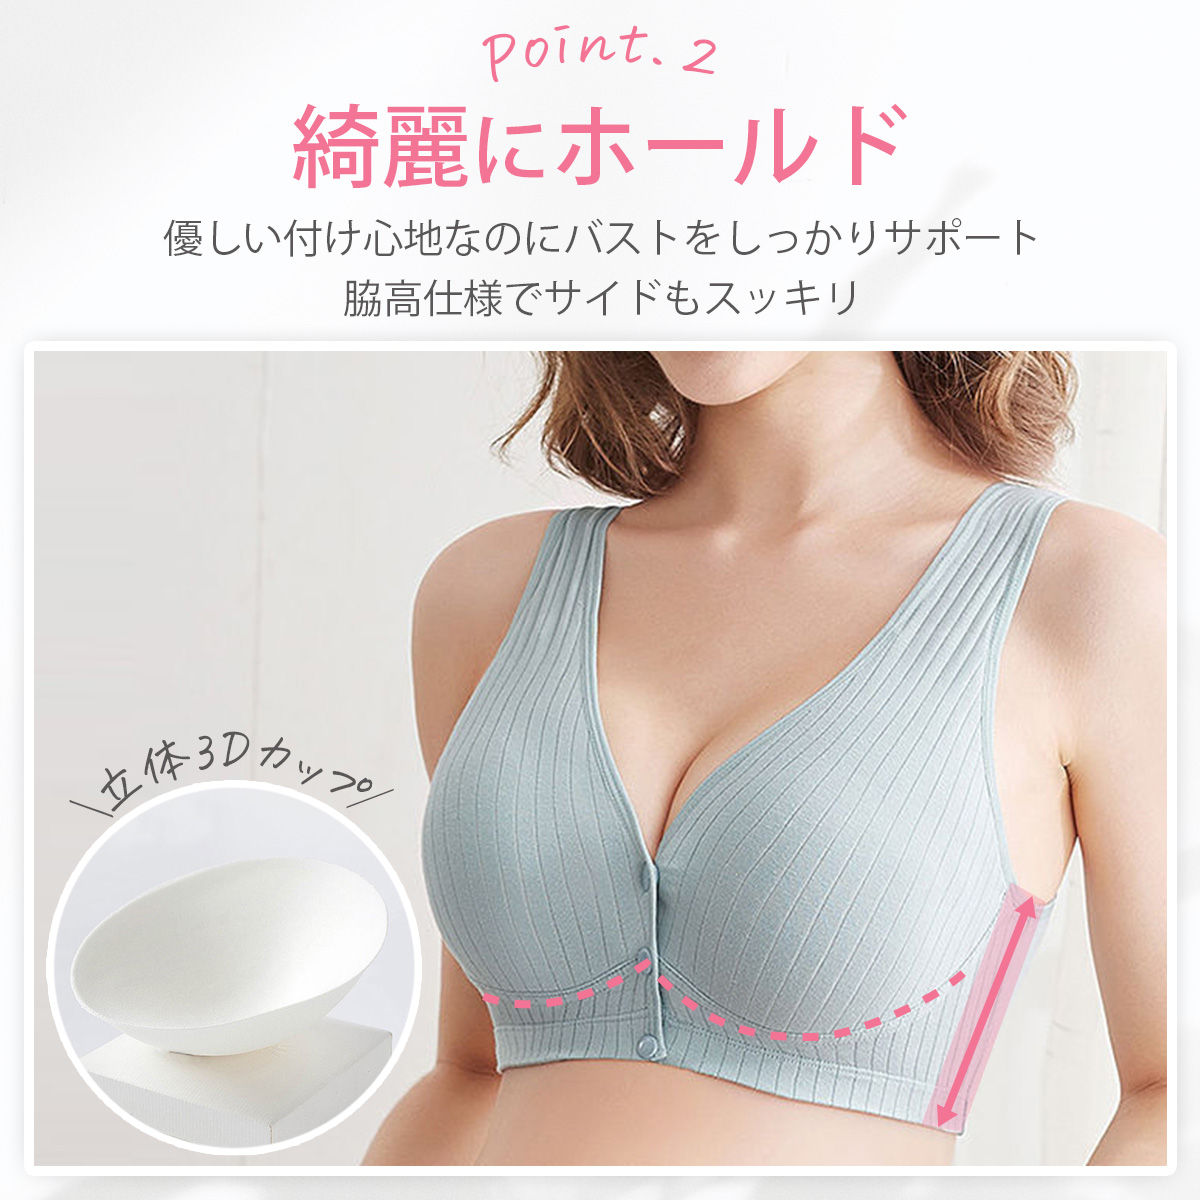  nursing bla maternity bras large size 2 pieces set front opening bla maternity -bla bra underwear Night bla non wire 